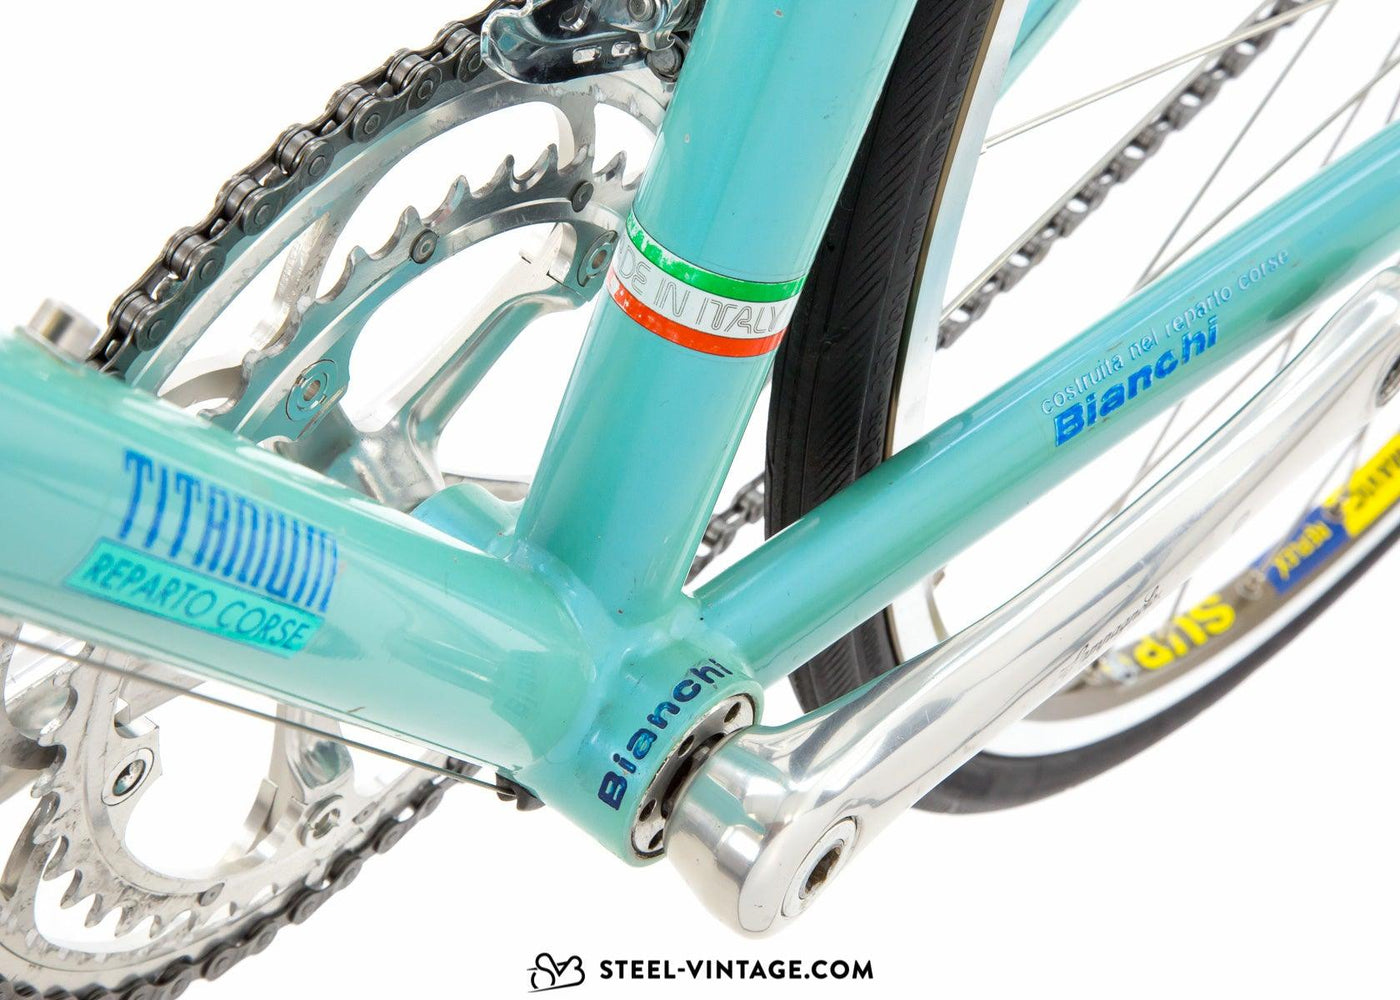 Bianchi Reparto Corse Titanium Road Bicycle 1990s - Steel Vintage Bikes